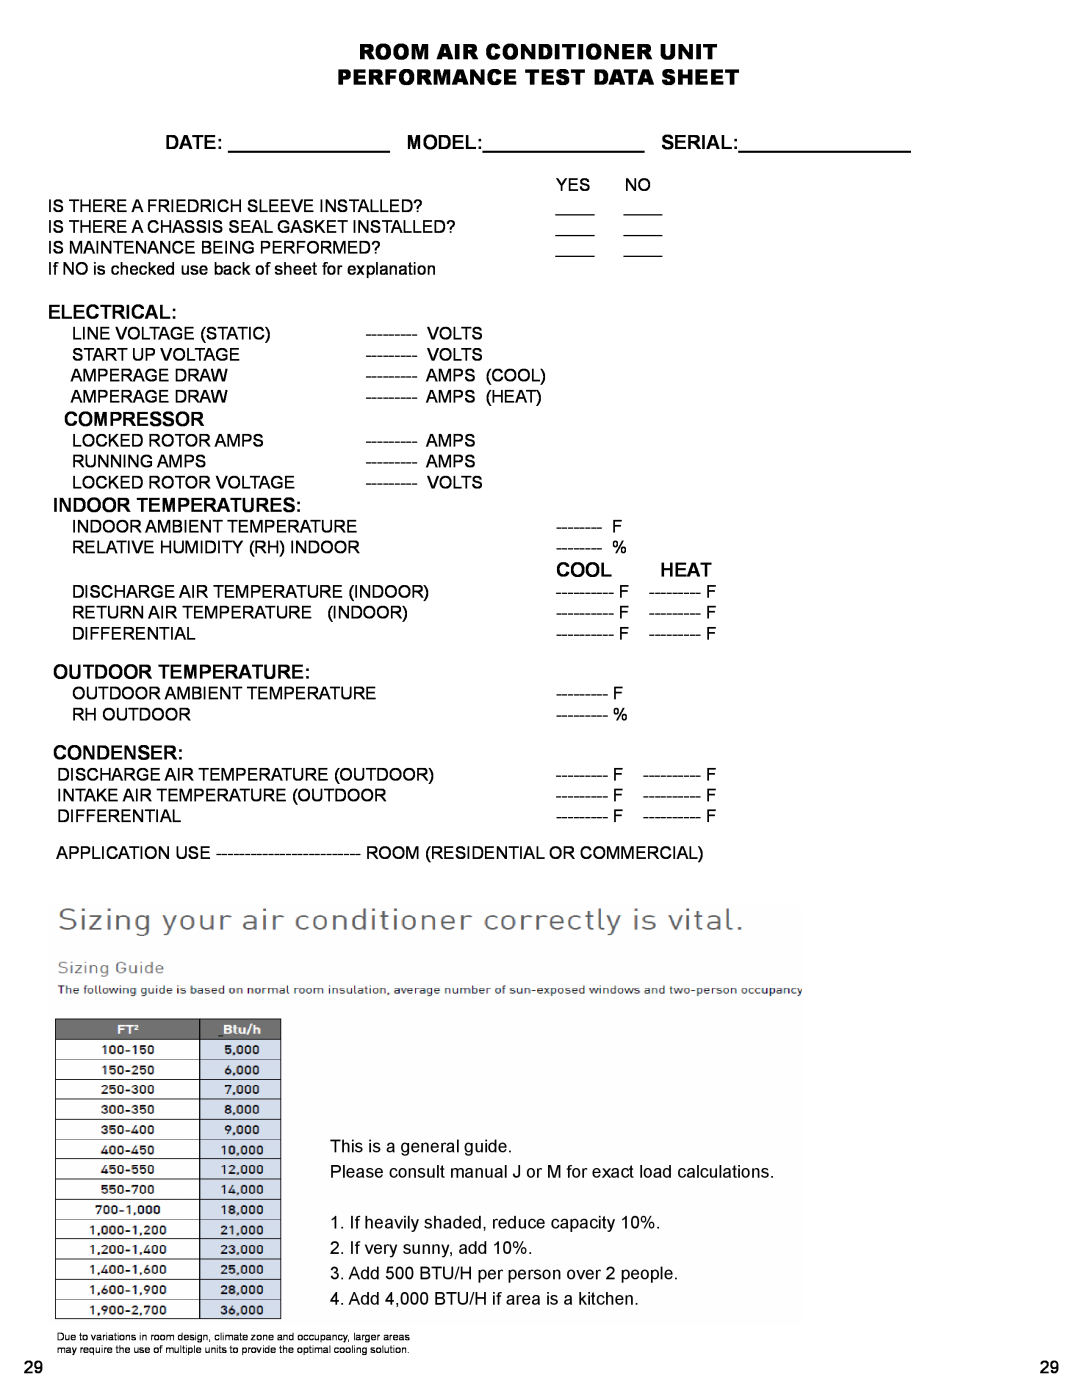 Friedrich EQ08M11 Room Air Conditioner Unit, Performance Test Data Sheet, Date Model, Serial, Electrical, Compressor, Heat 